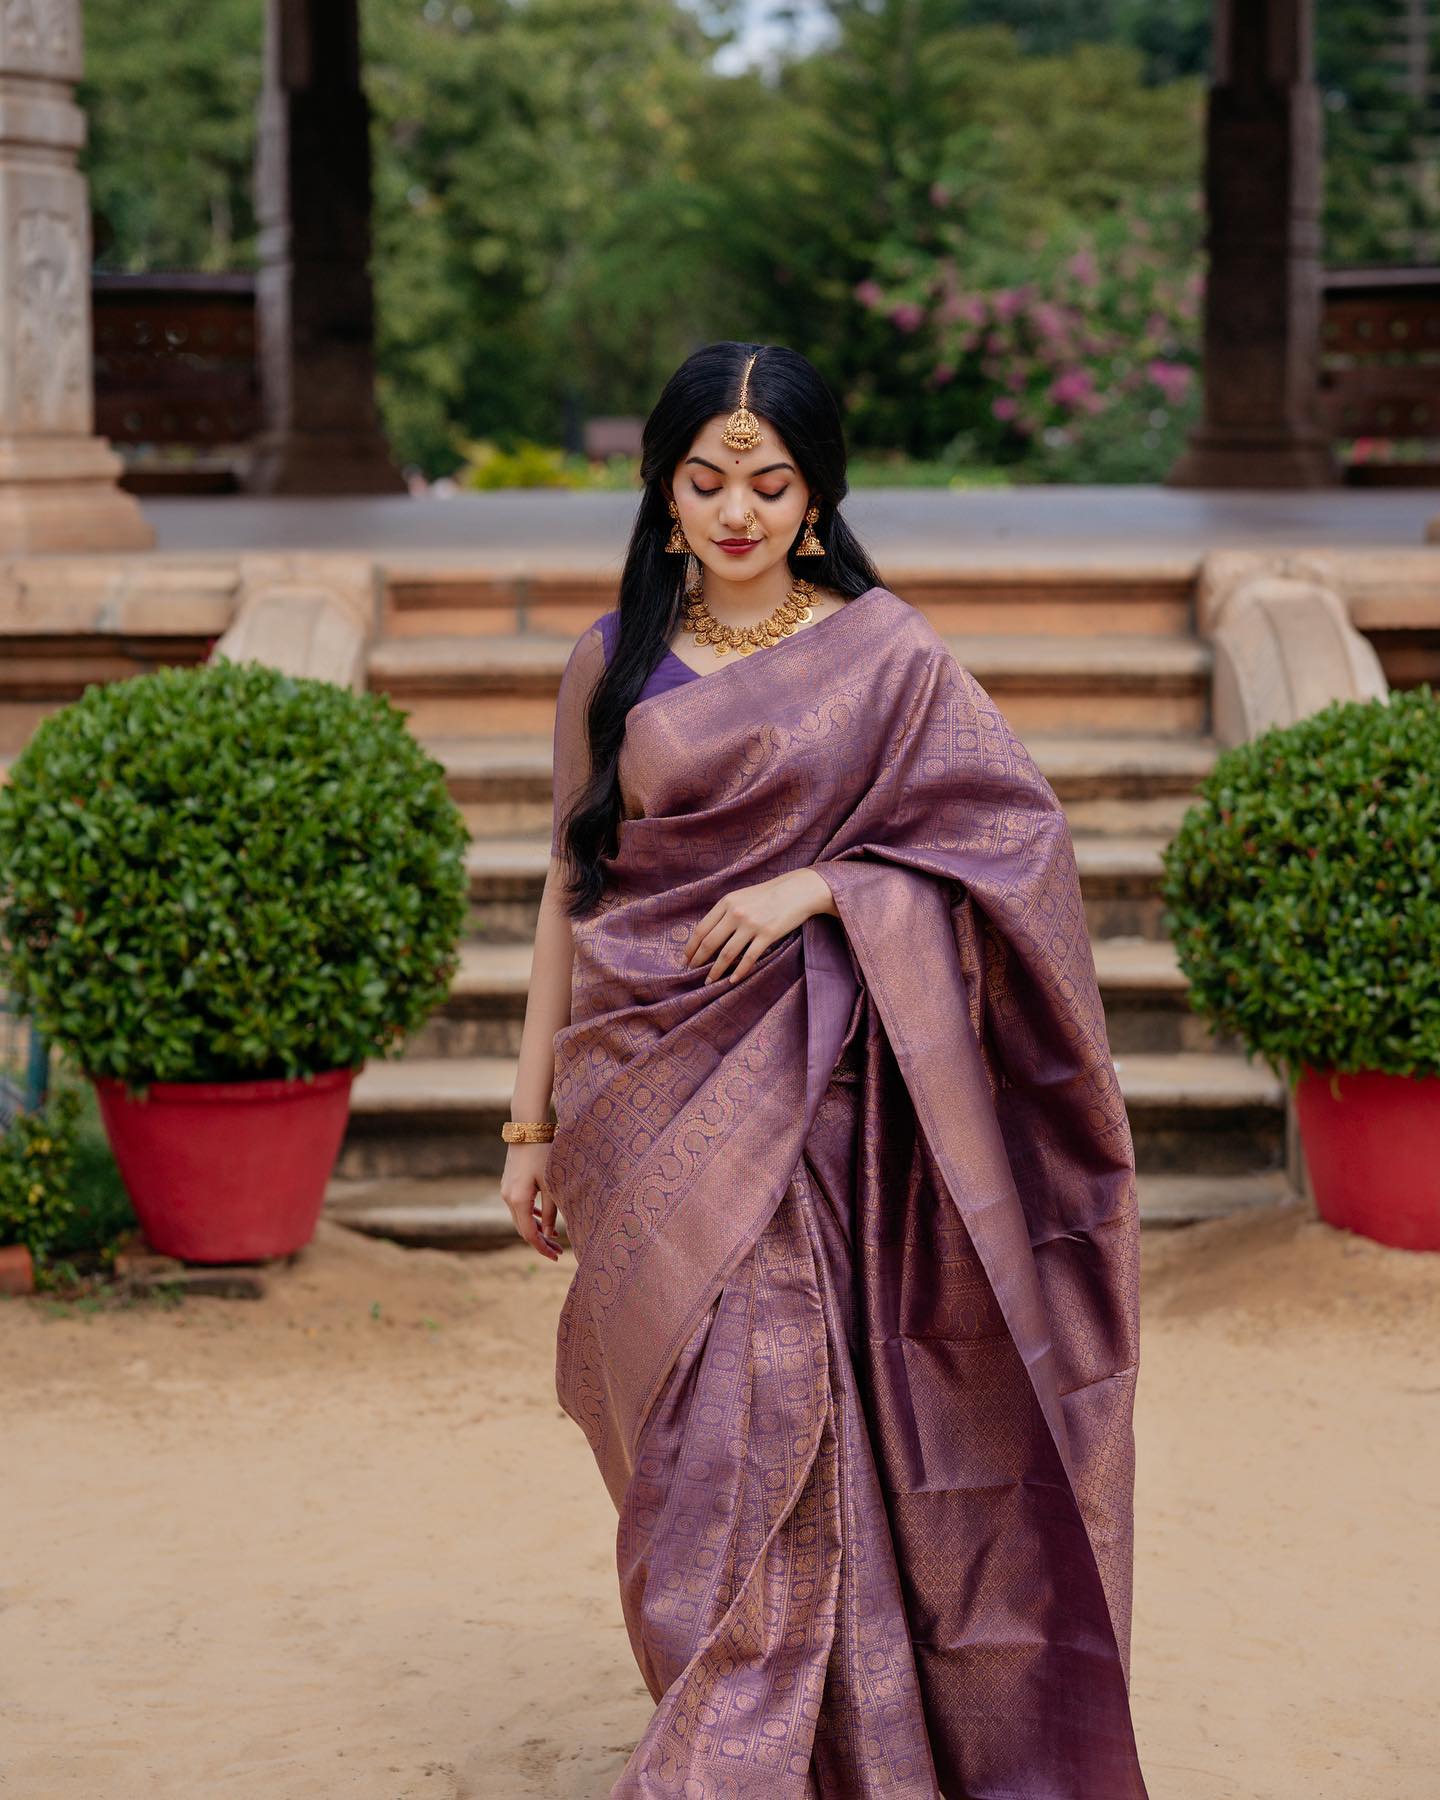 ahaana-krishna-in-thamburatti-style-saree-look-images-004